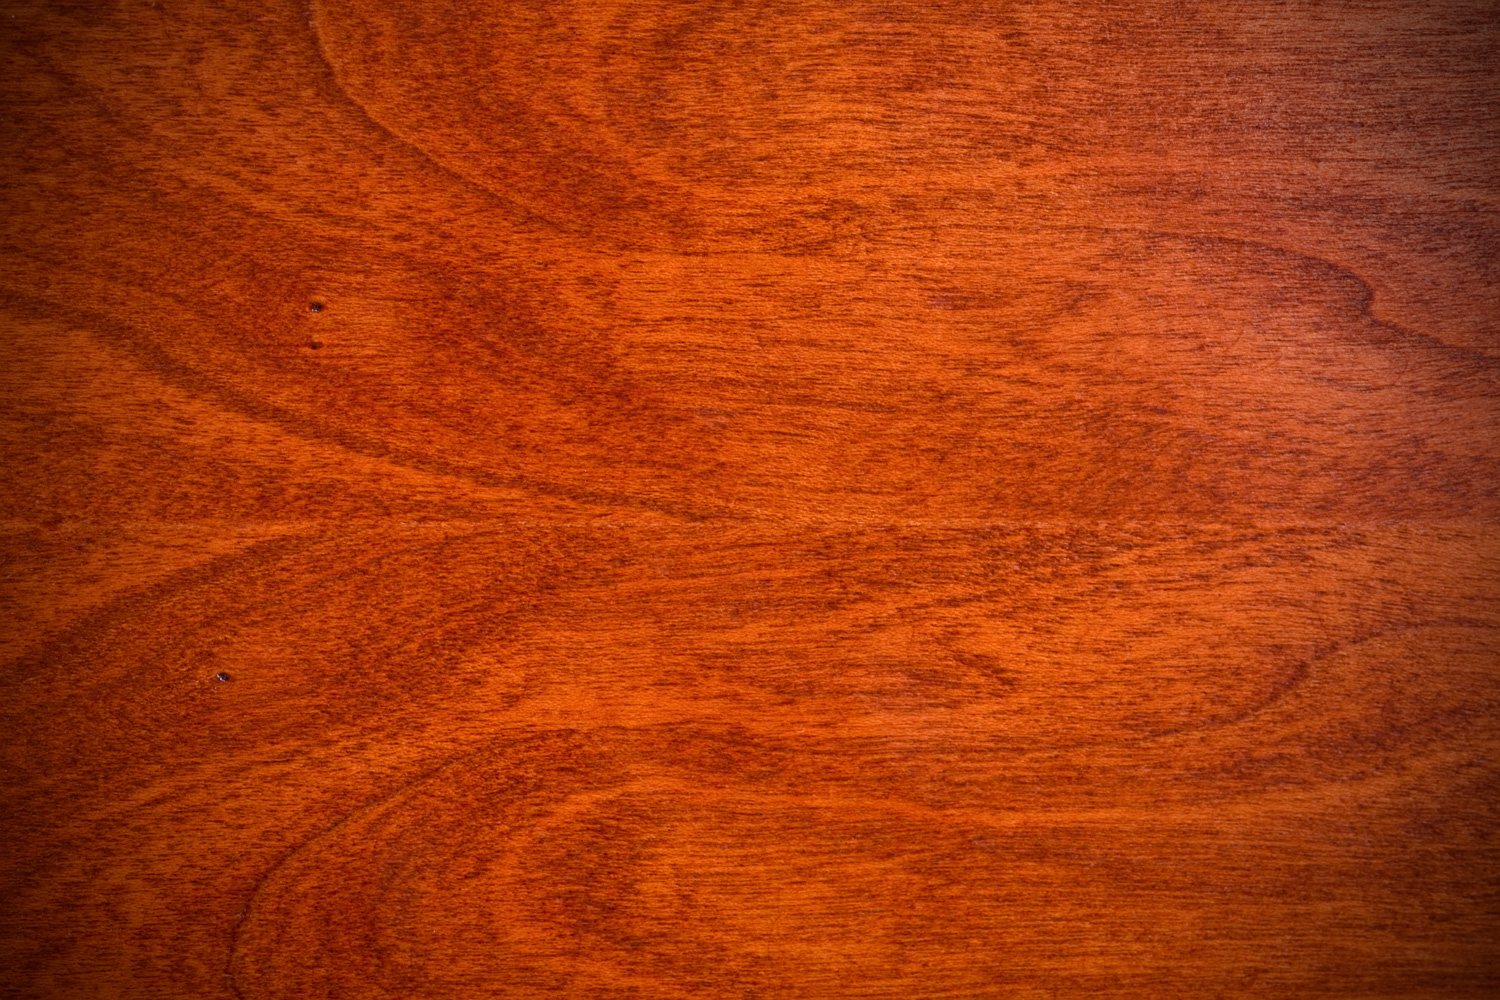 Closeup of natural cherry hardwood with grain detail.